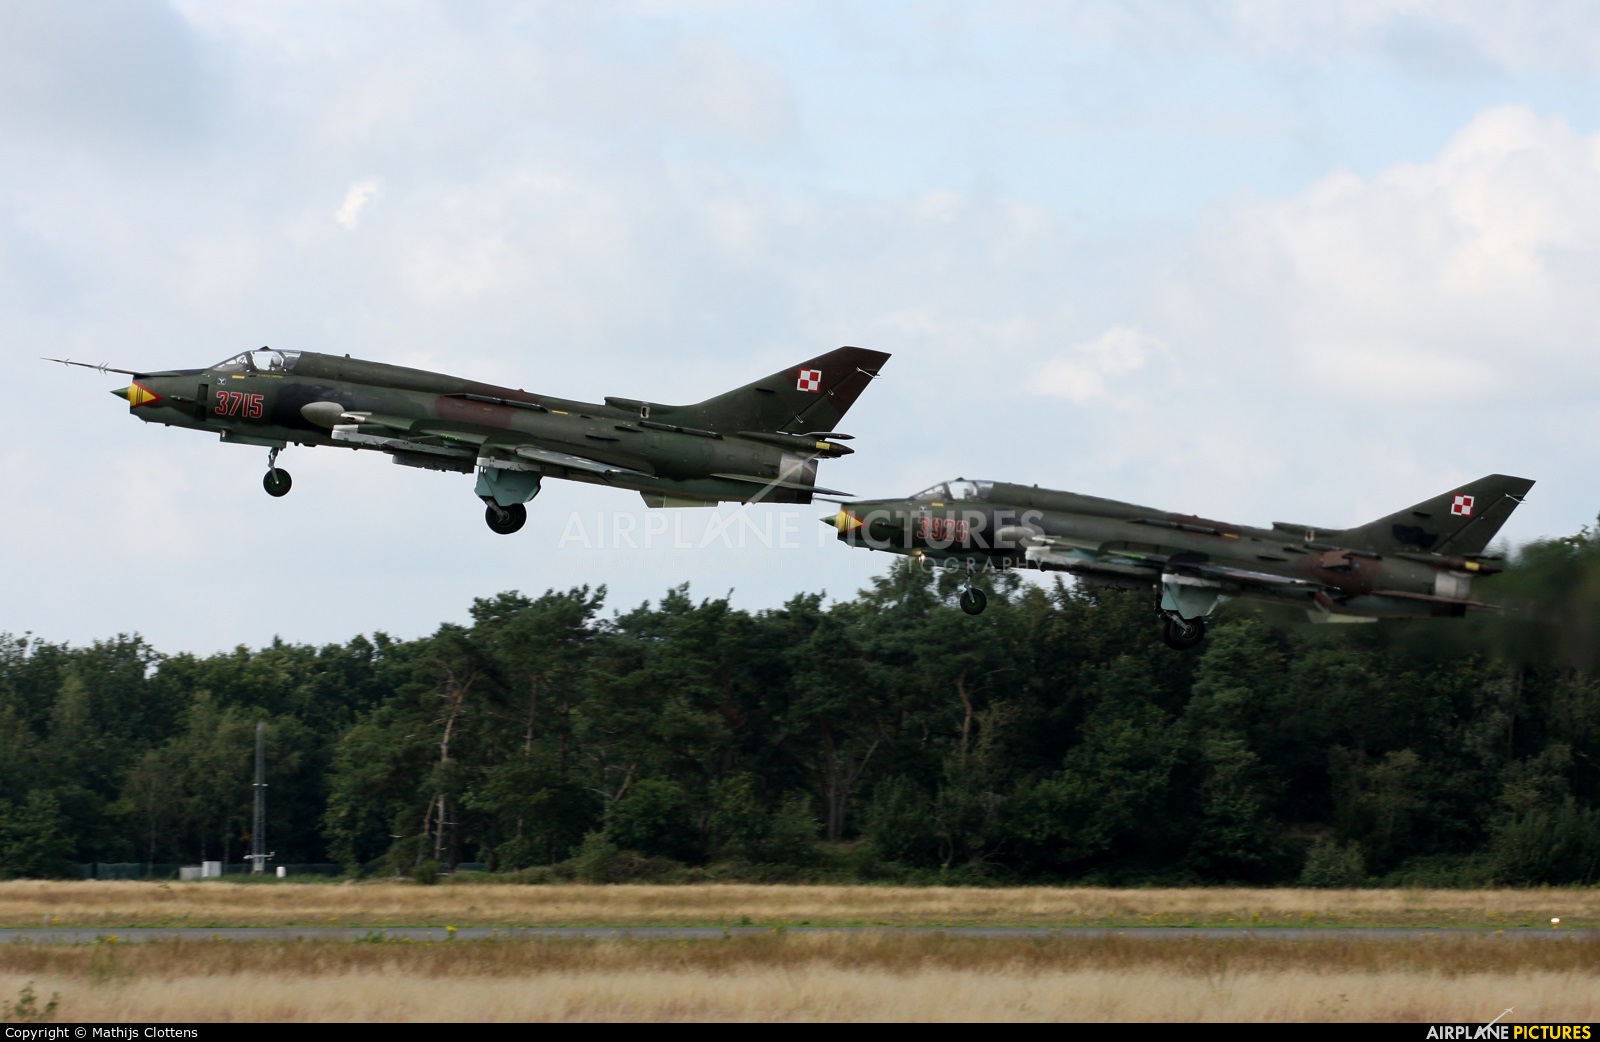 Poland - Air Force 3715 aircraft at Kleine Brogel